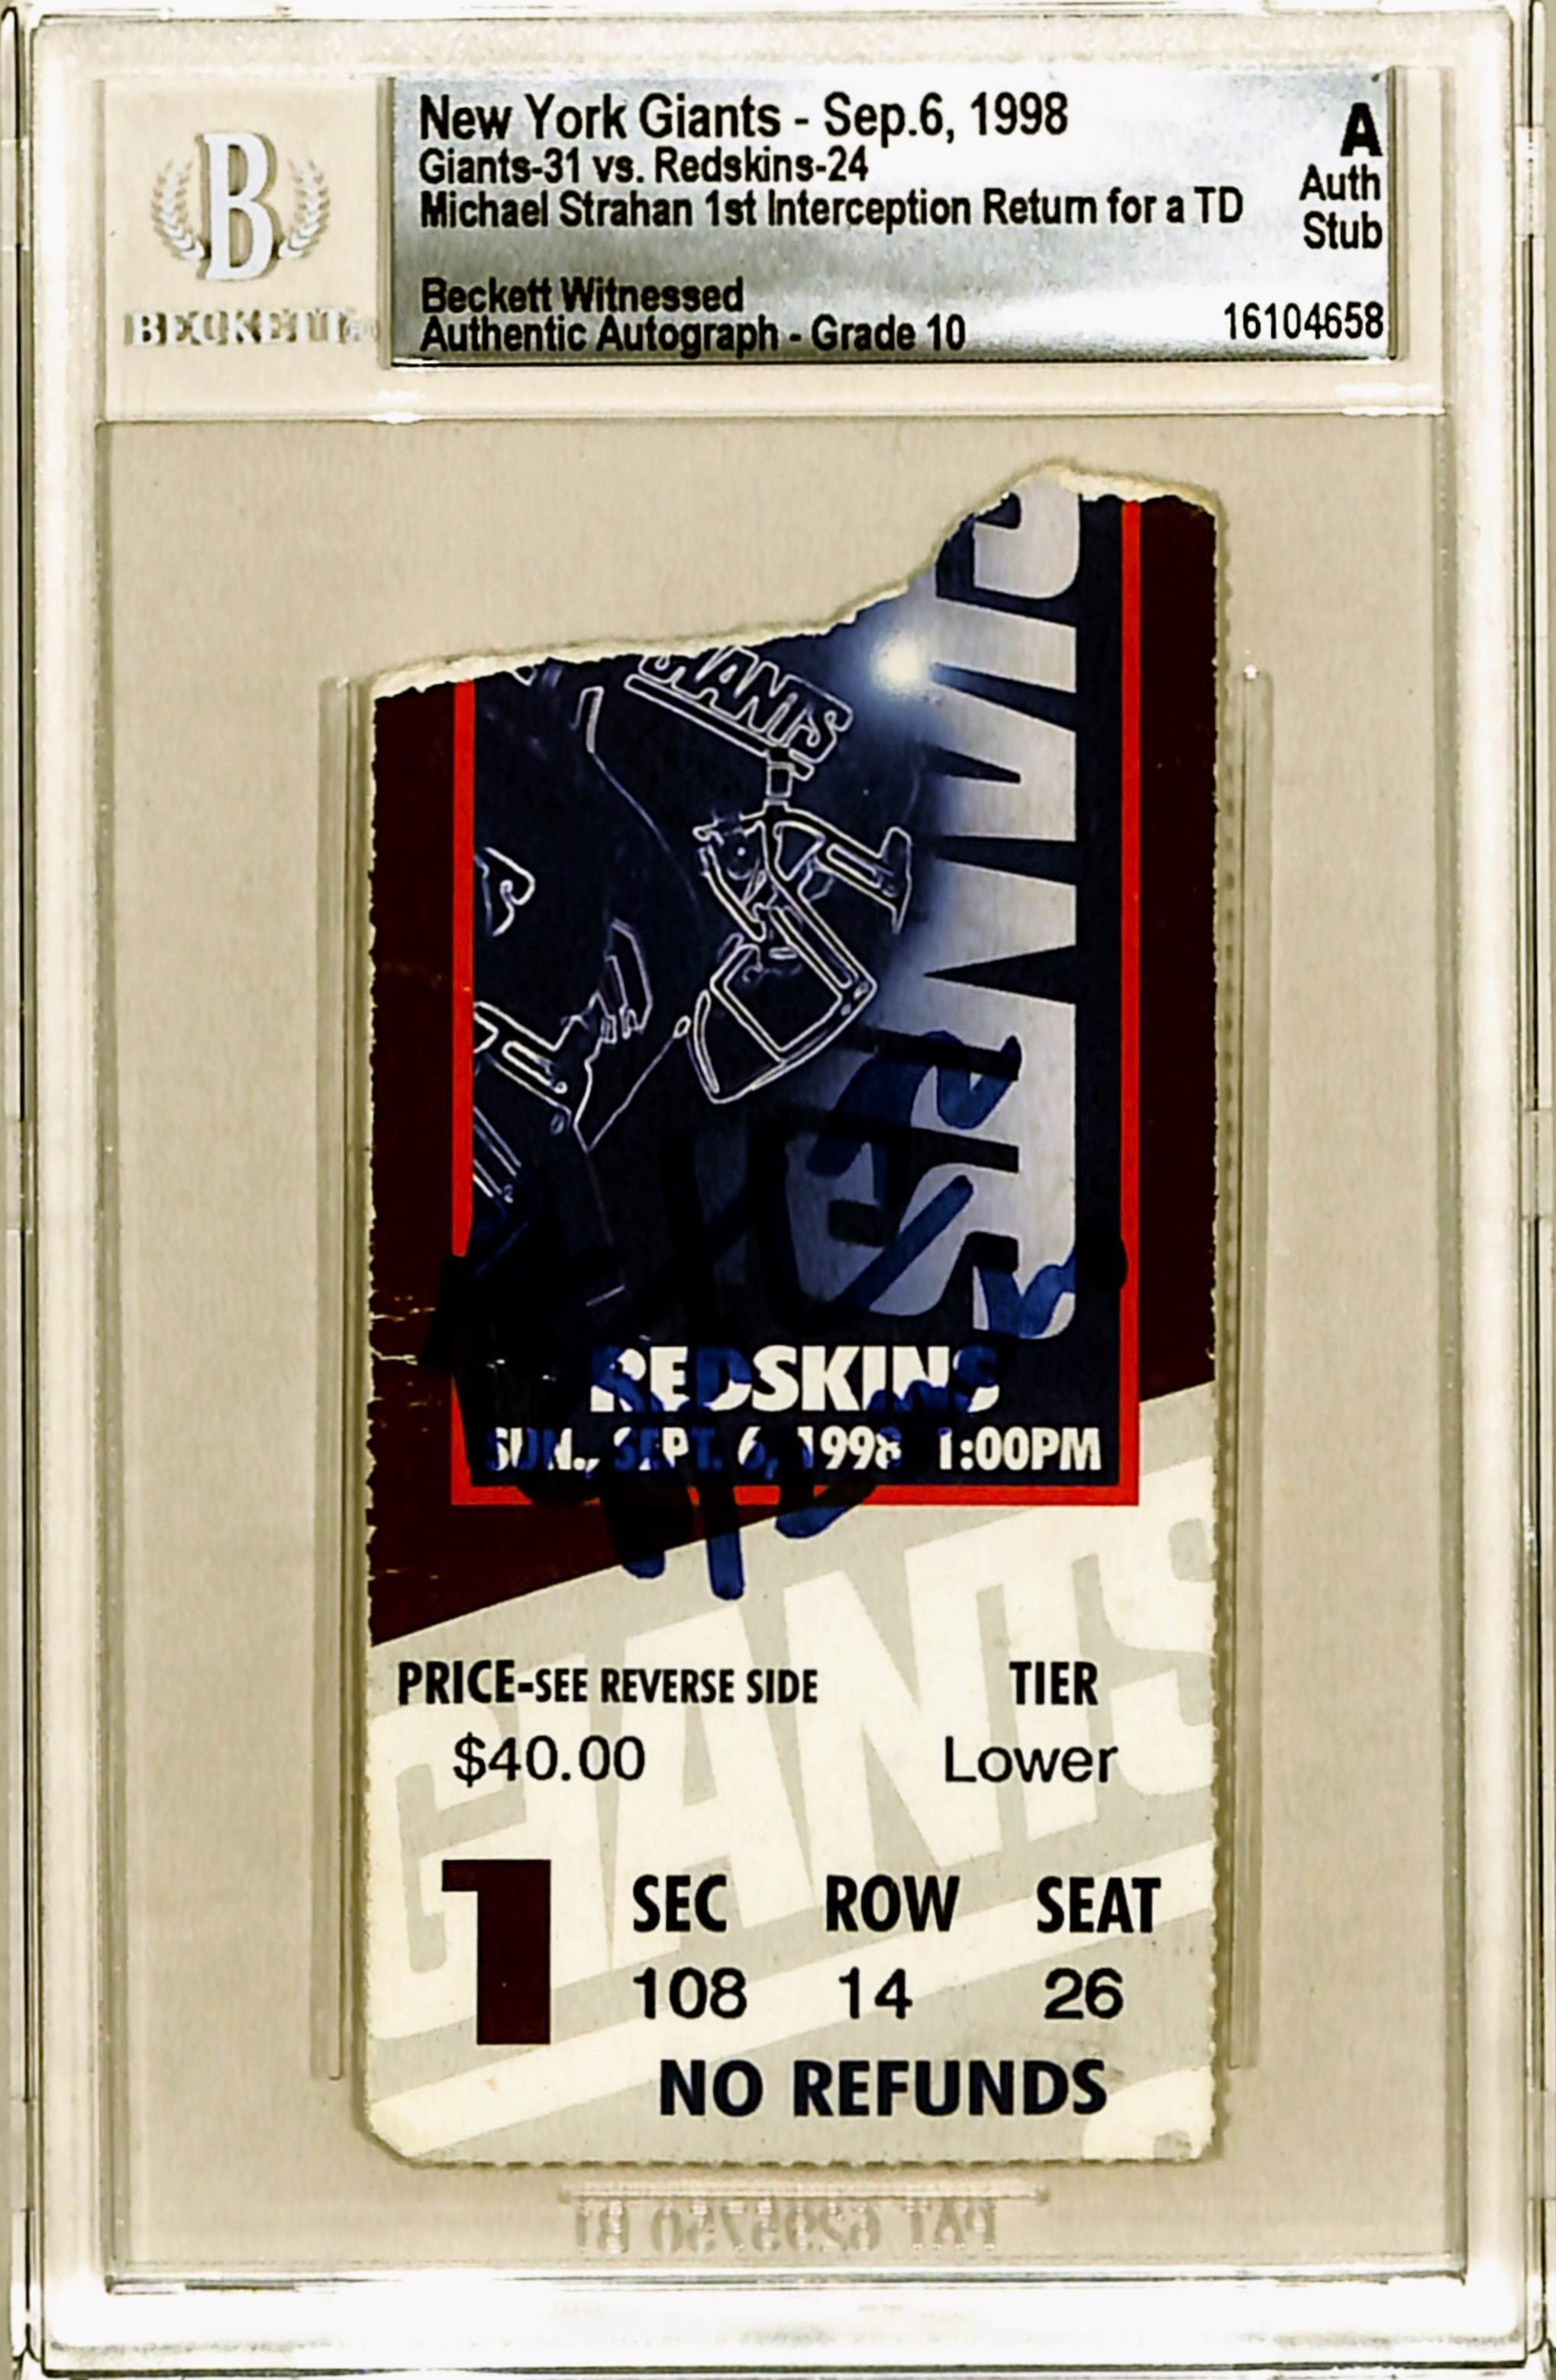 Michael Strahan Signed New York Giants Ticket Stub 09/06/98 Beckett Slab